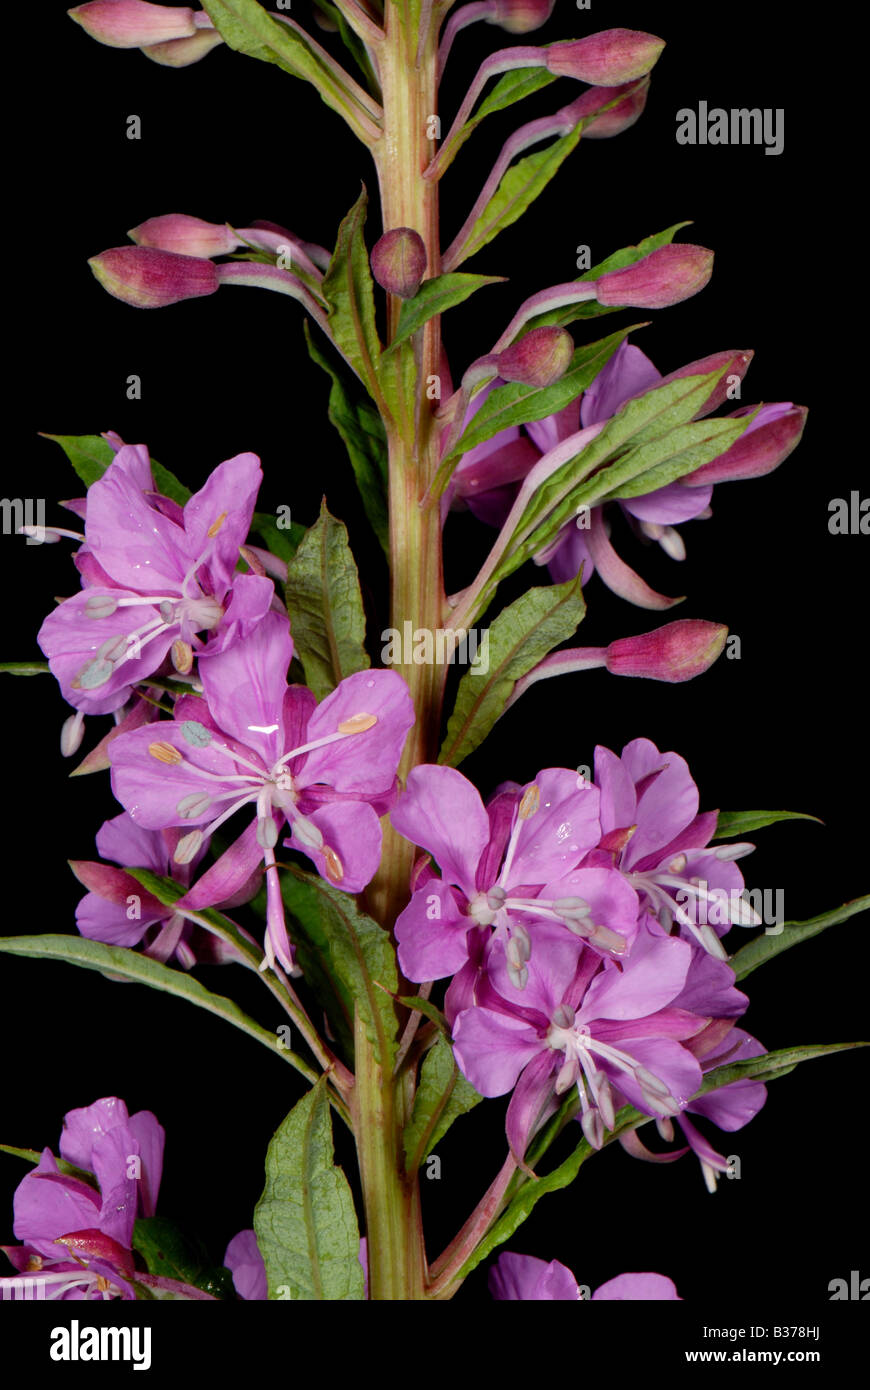 Rosebay willowherb (Chamaenerion augustifolium) fiori anthers stamens e stile Foto Stock